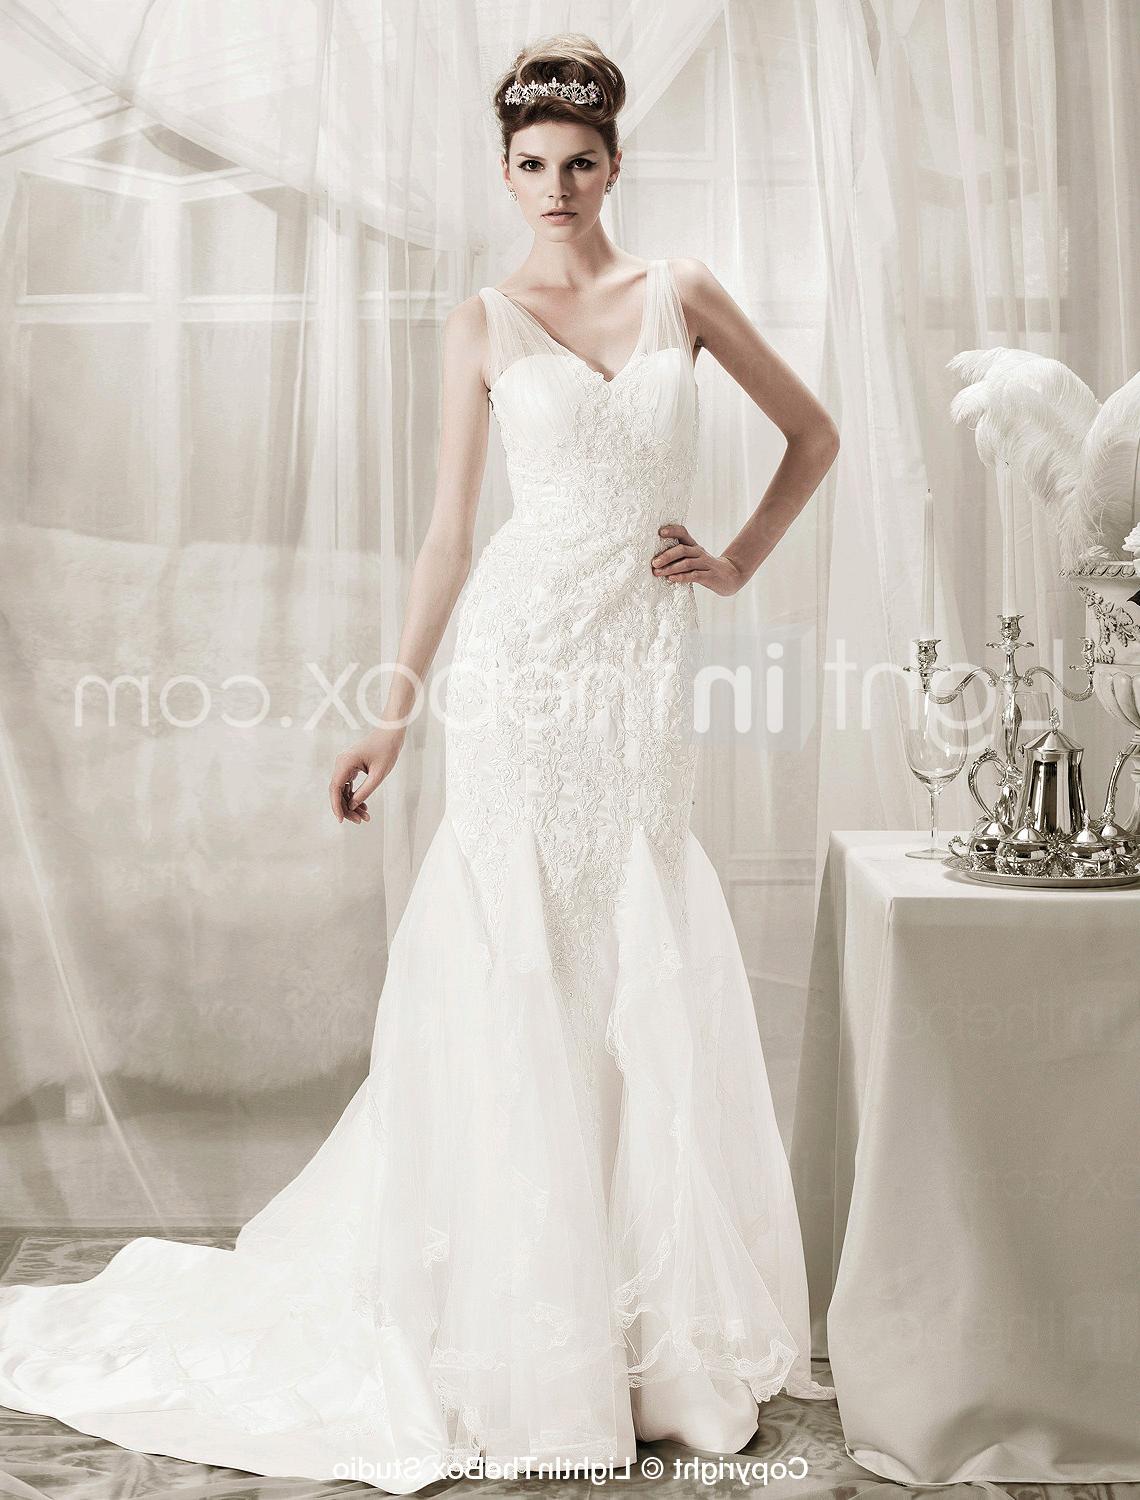 Wedding Dress - US  281.99